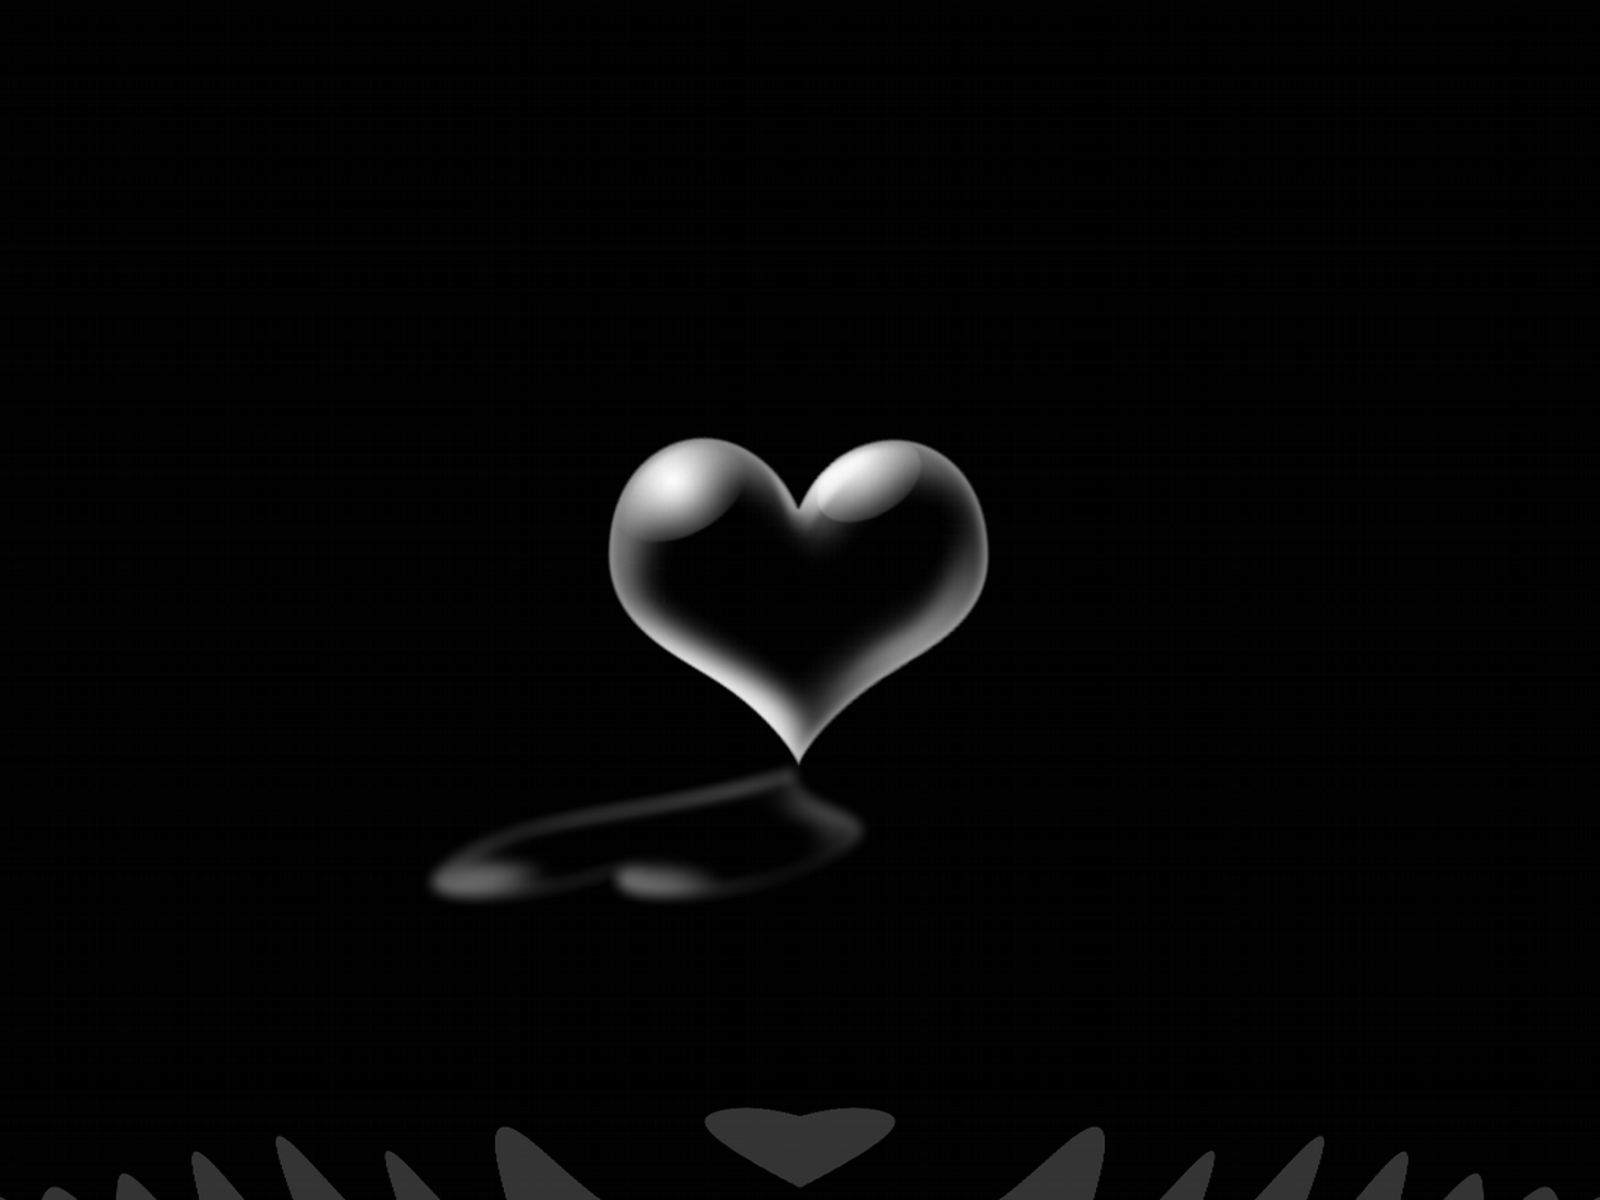 Black Wallpaper: Black Heart. Heart wallpaper hd, Heart wallpaper, Black heart emoji